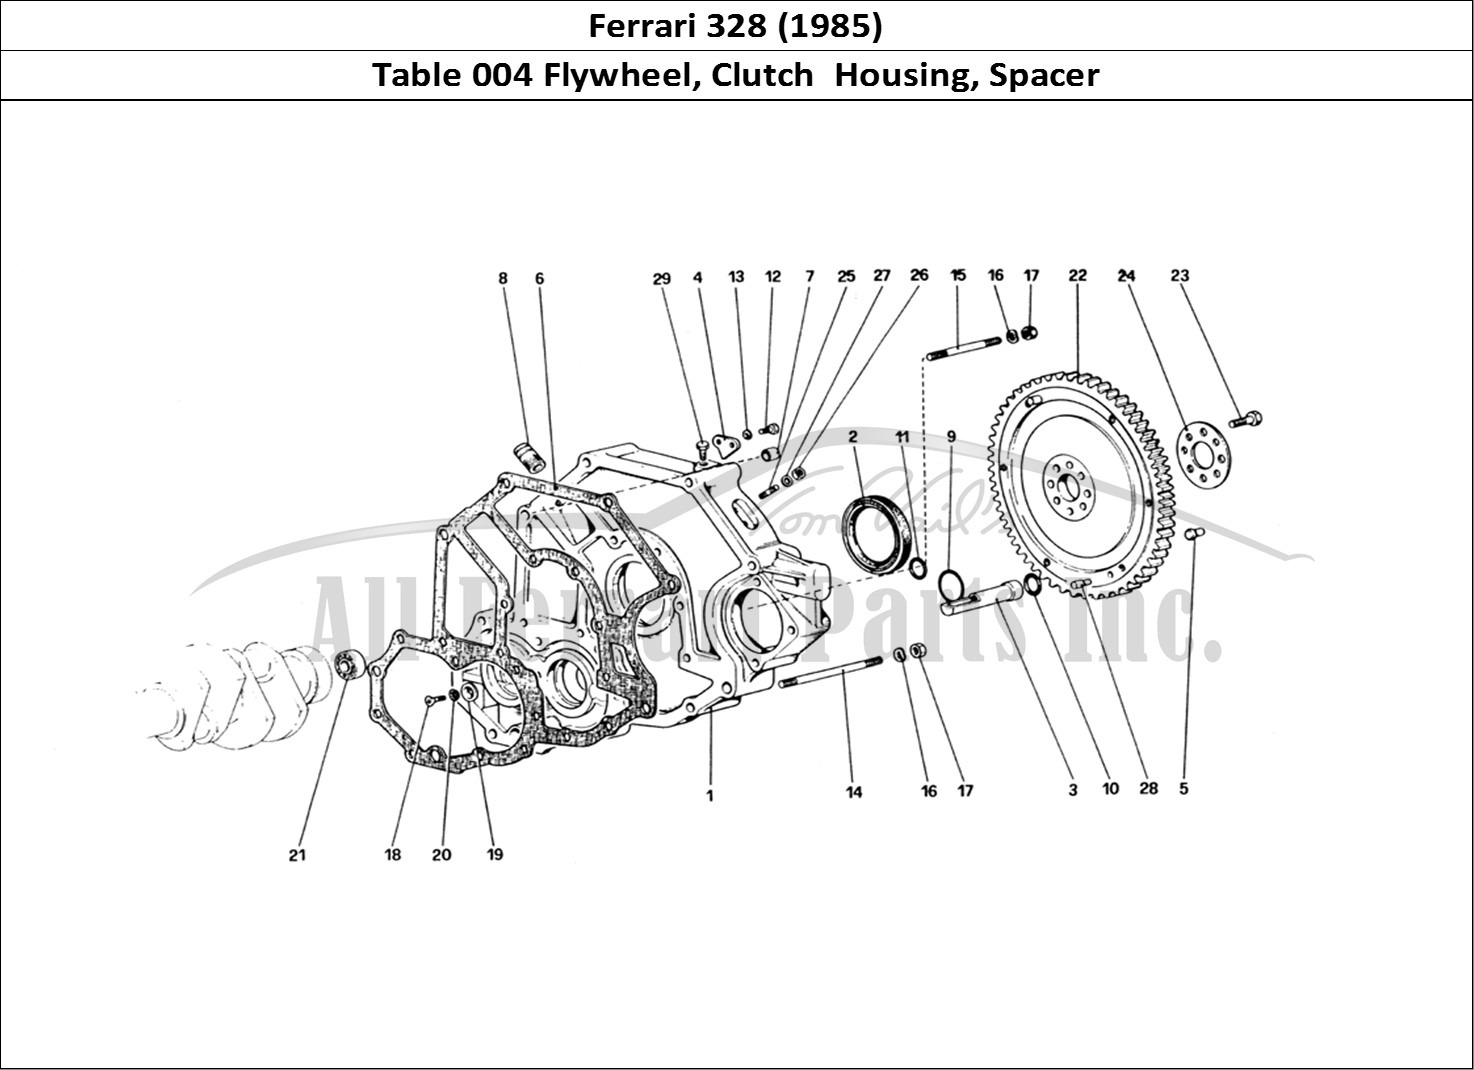 Ferrari Parts Ferrari 328 (1985) Page 004 Flywheel and Clutch Housi